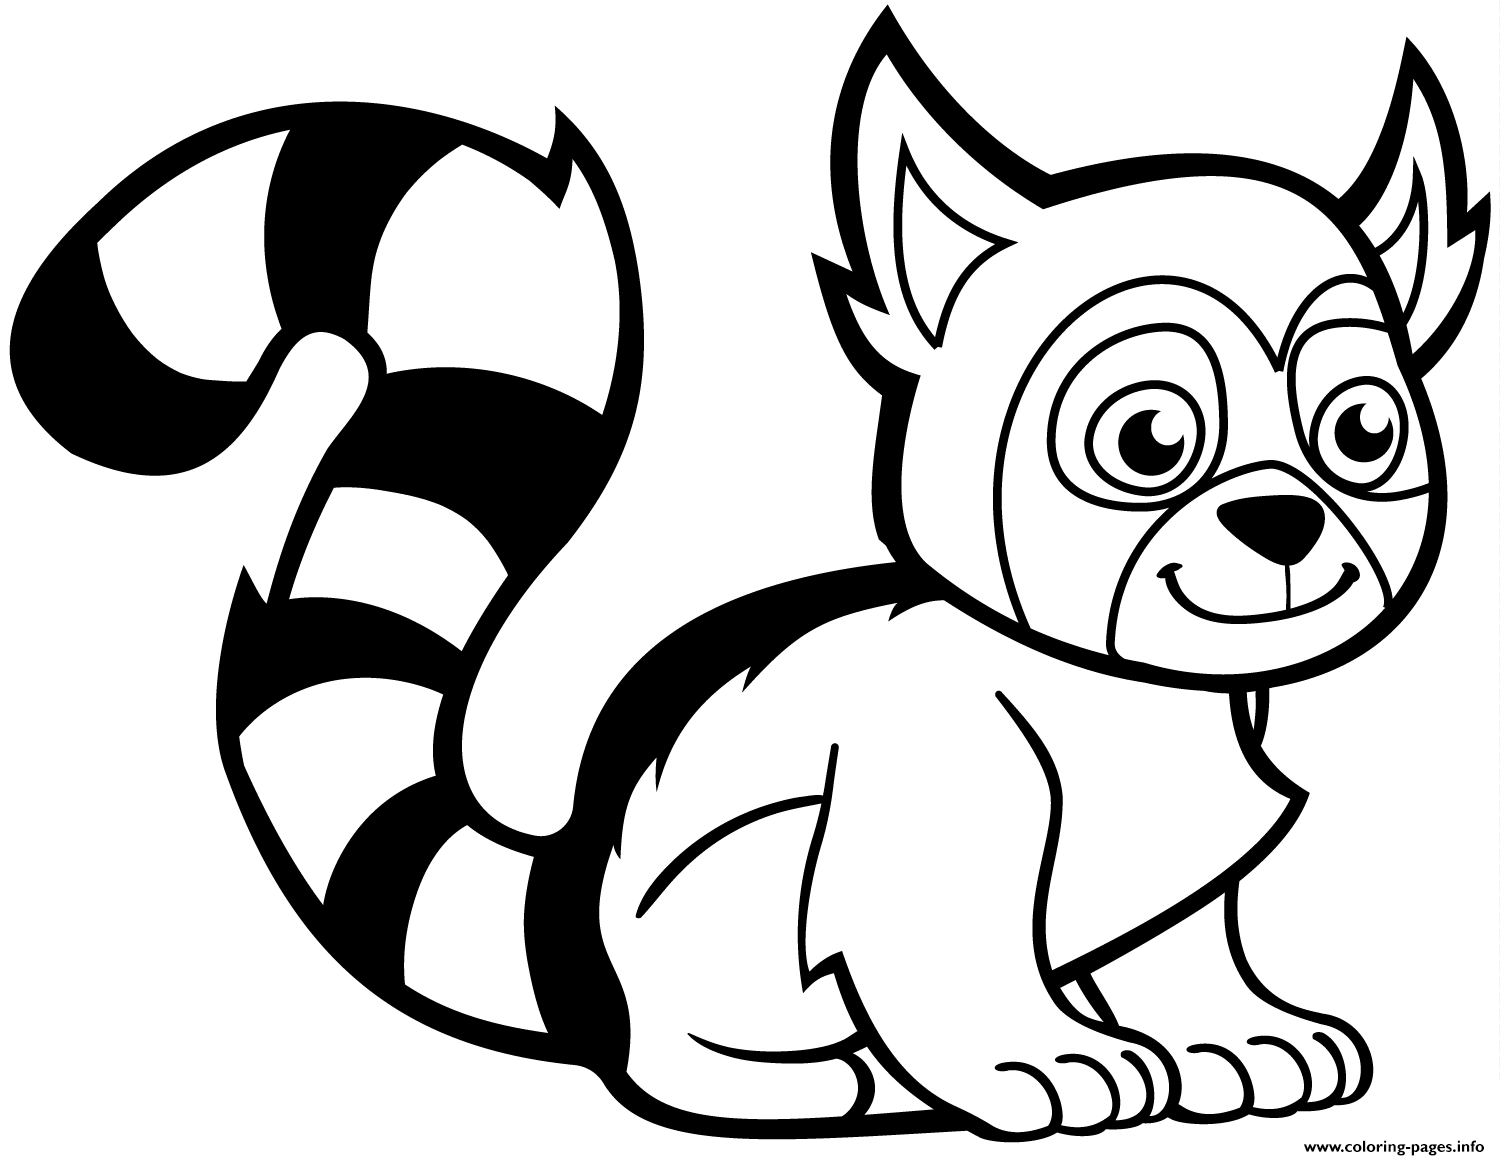 Funny Lemur coloring pages